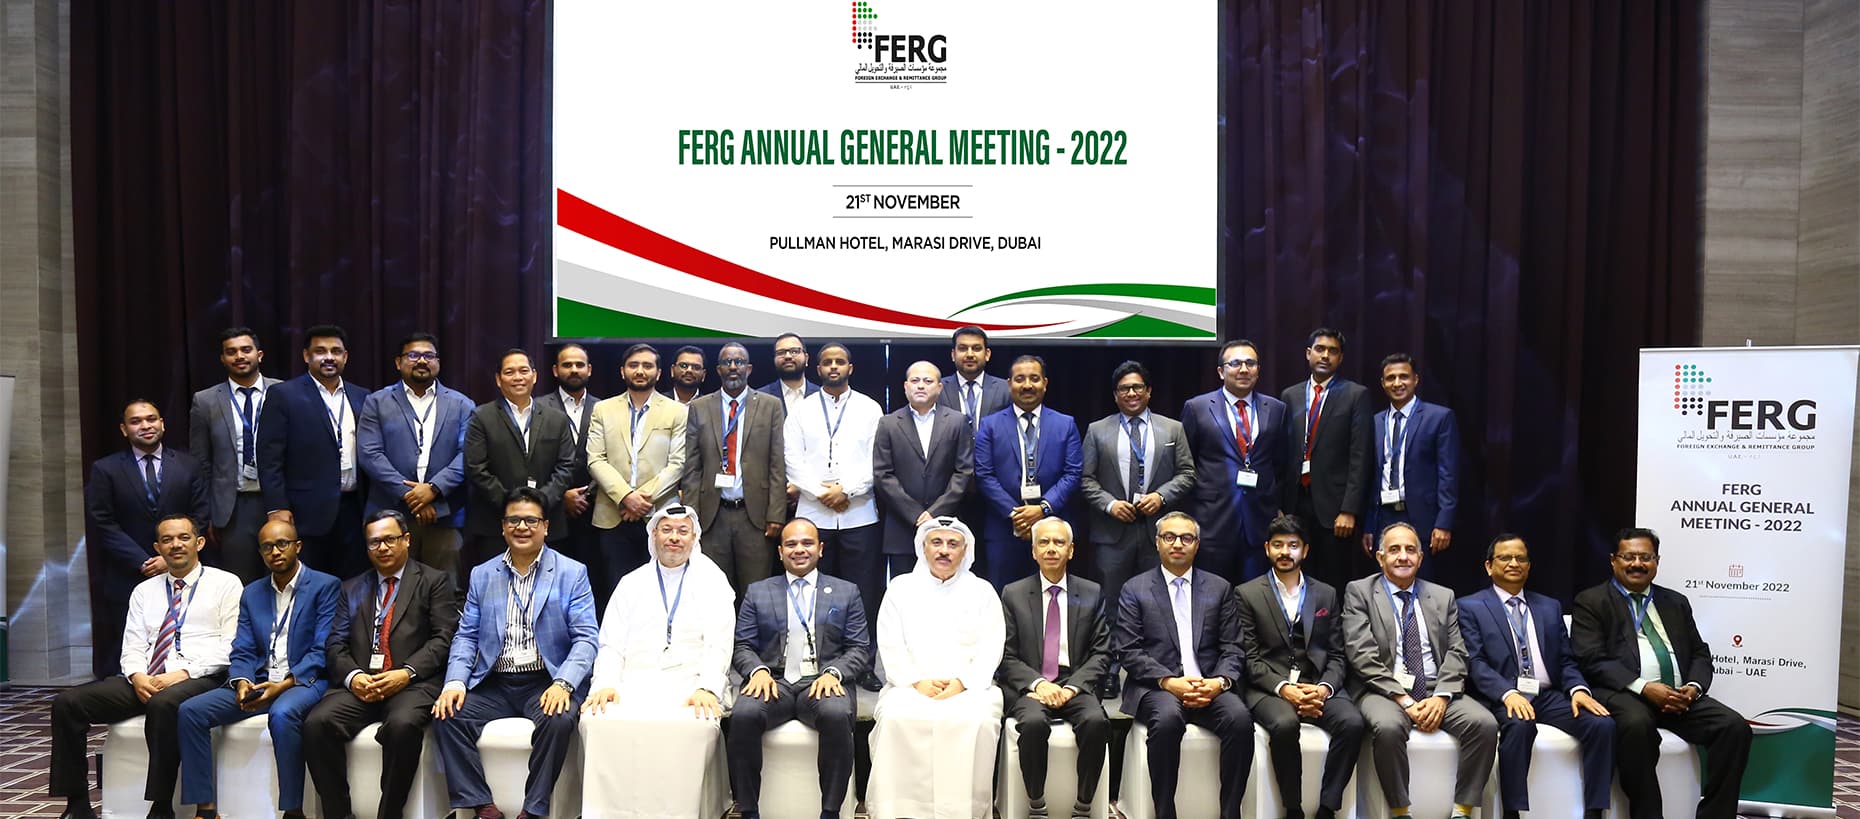 FERG Annual General Meeting 2022